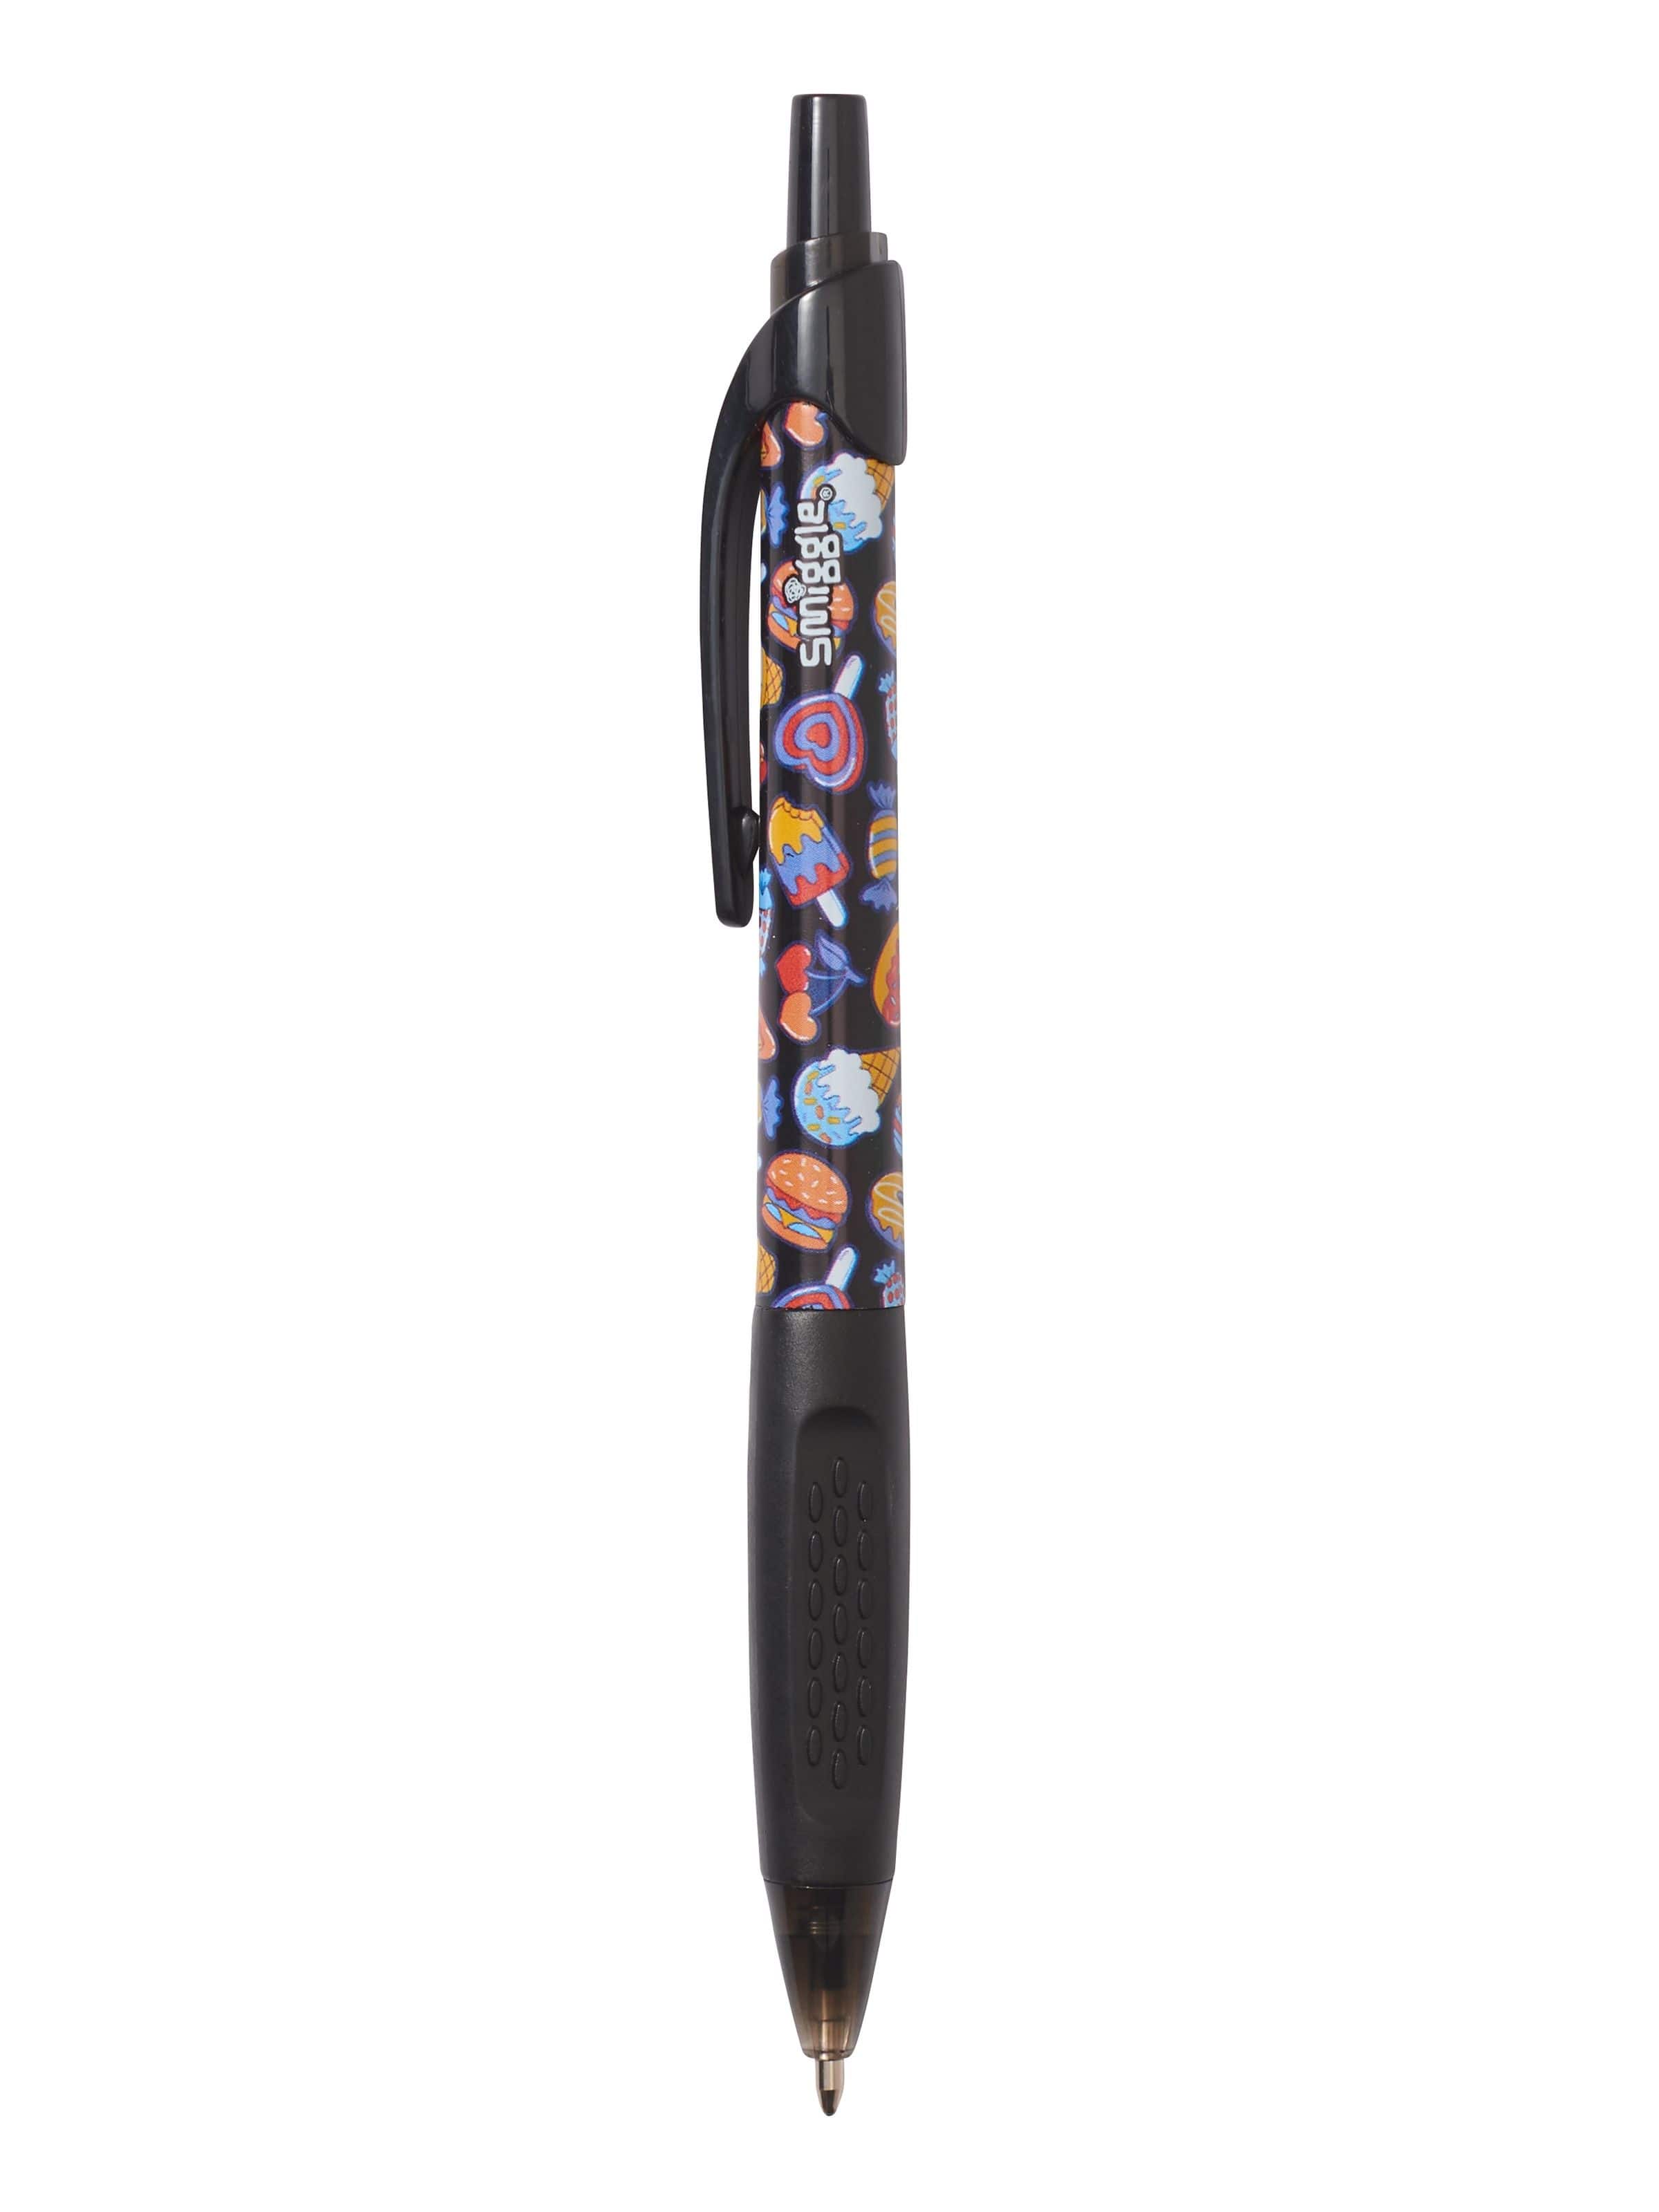 Invisible Ink Pen (4 Pack) Latest Spy Pen + 6 Flexible Bendy